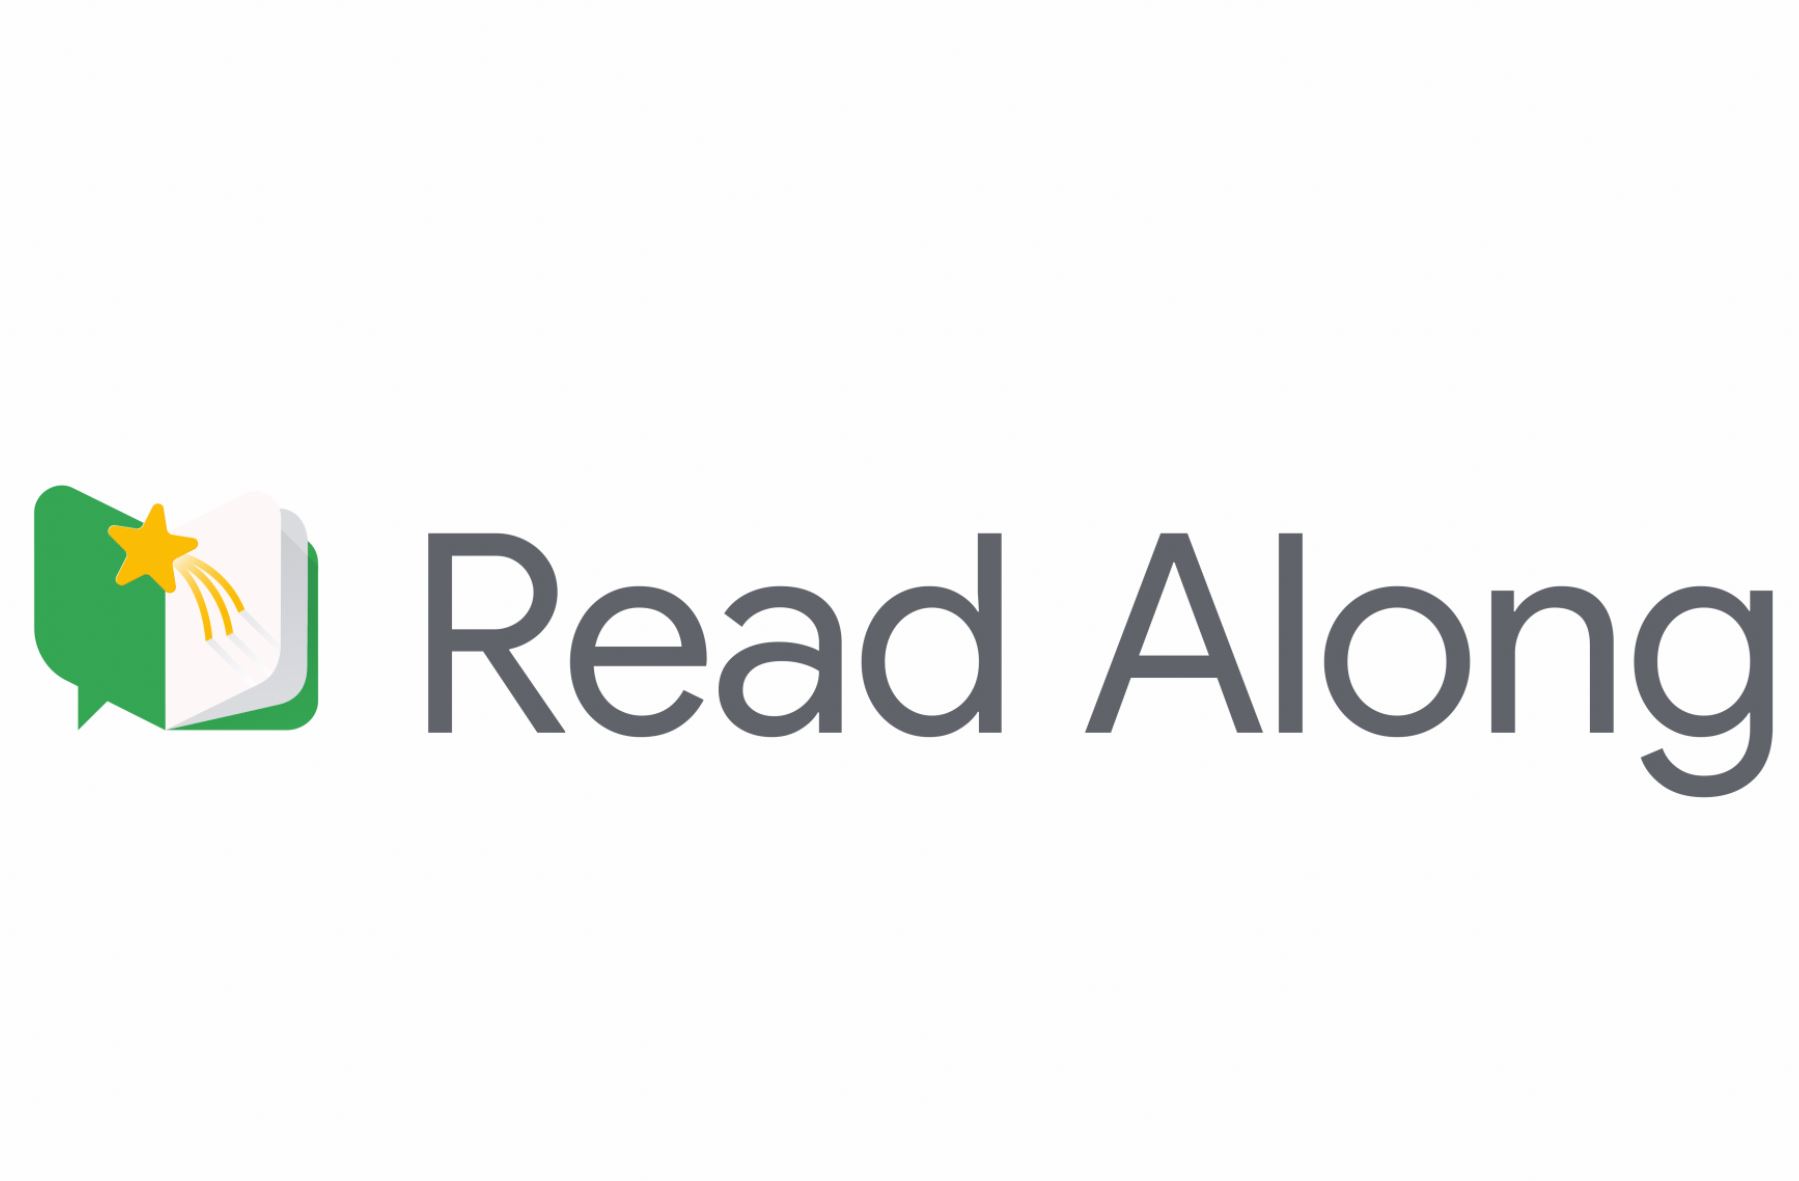 Google Read Along app helps kids improve their reading skills - MSPoweruser